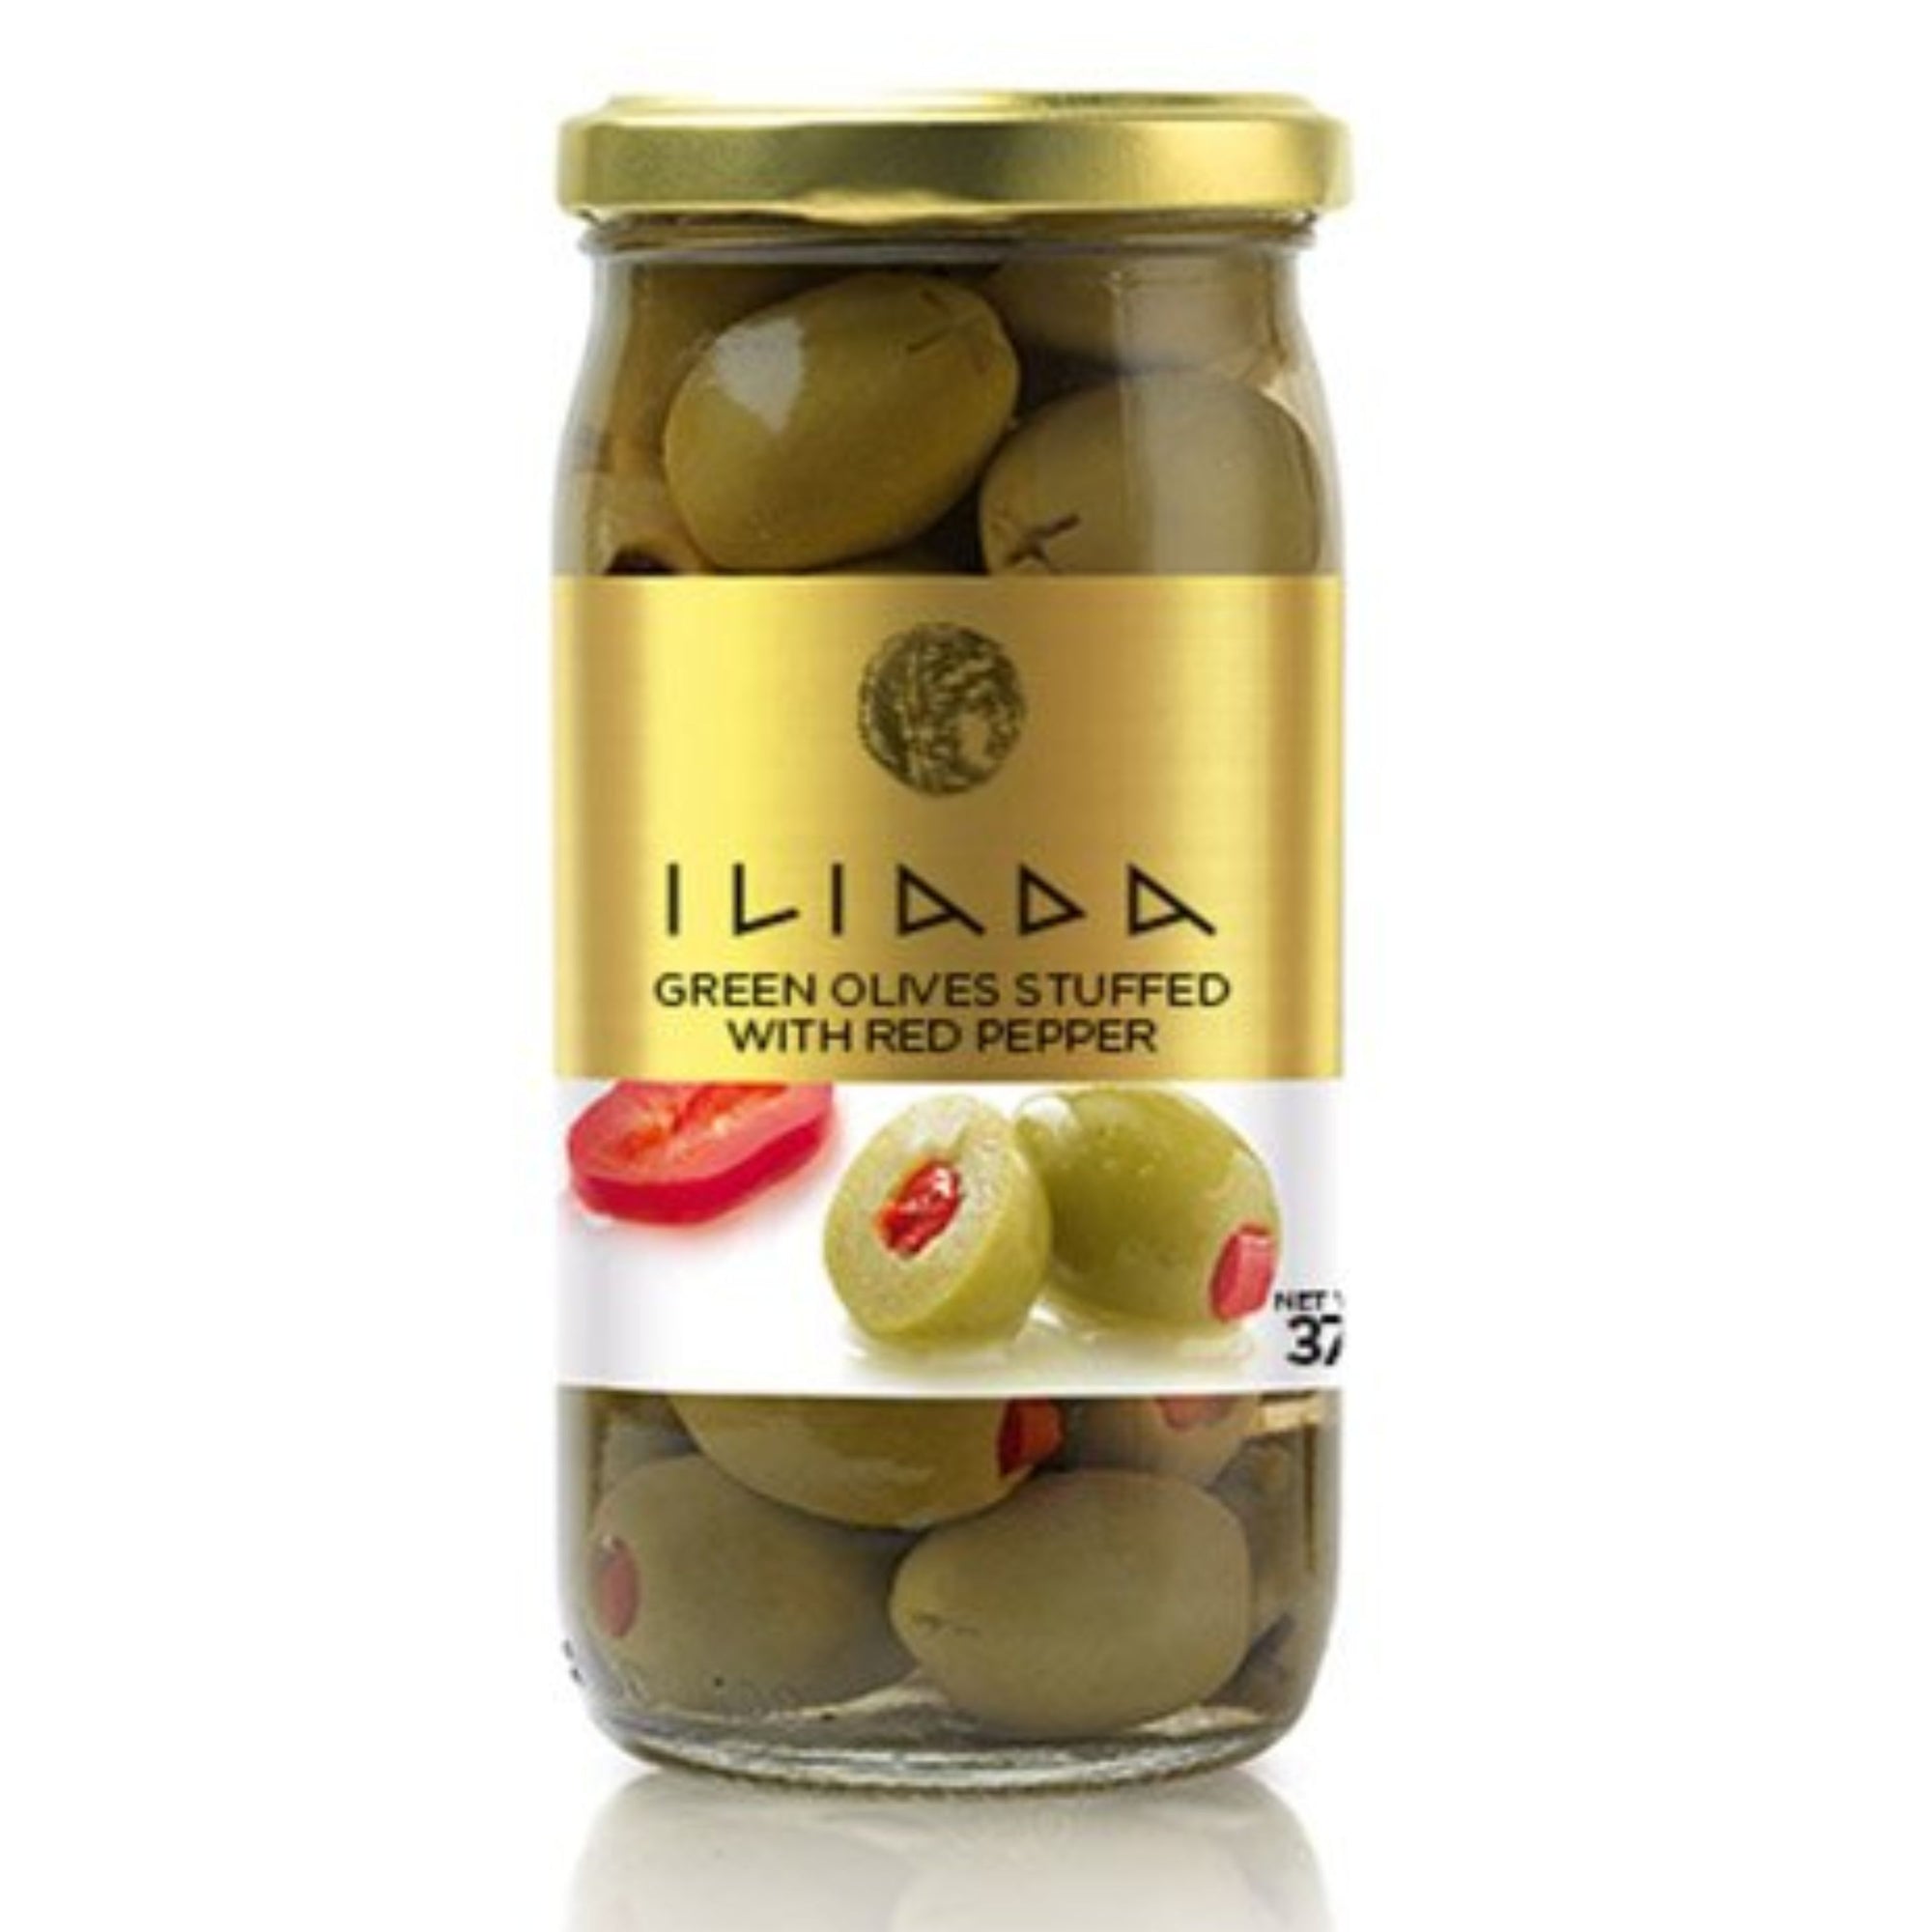 Green Olives stuffed w/ Red Pepper 'Iliada' 370g -Gold Line